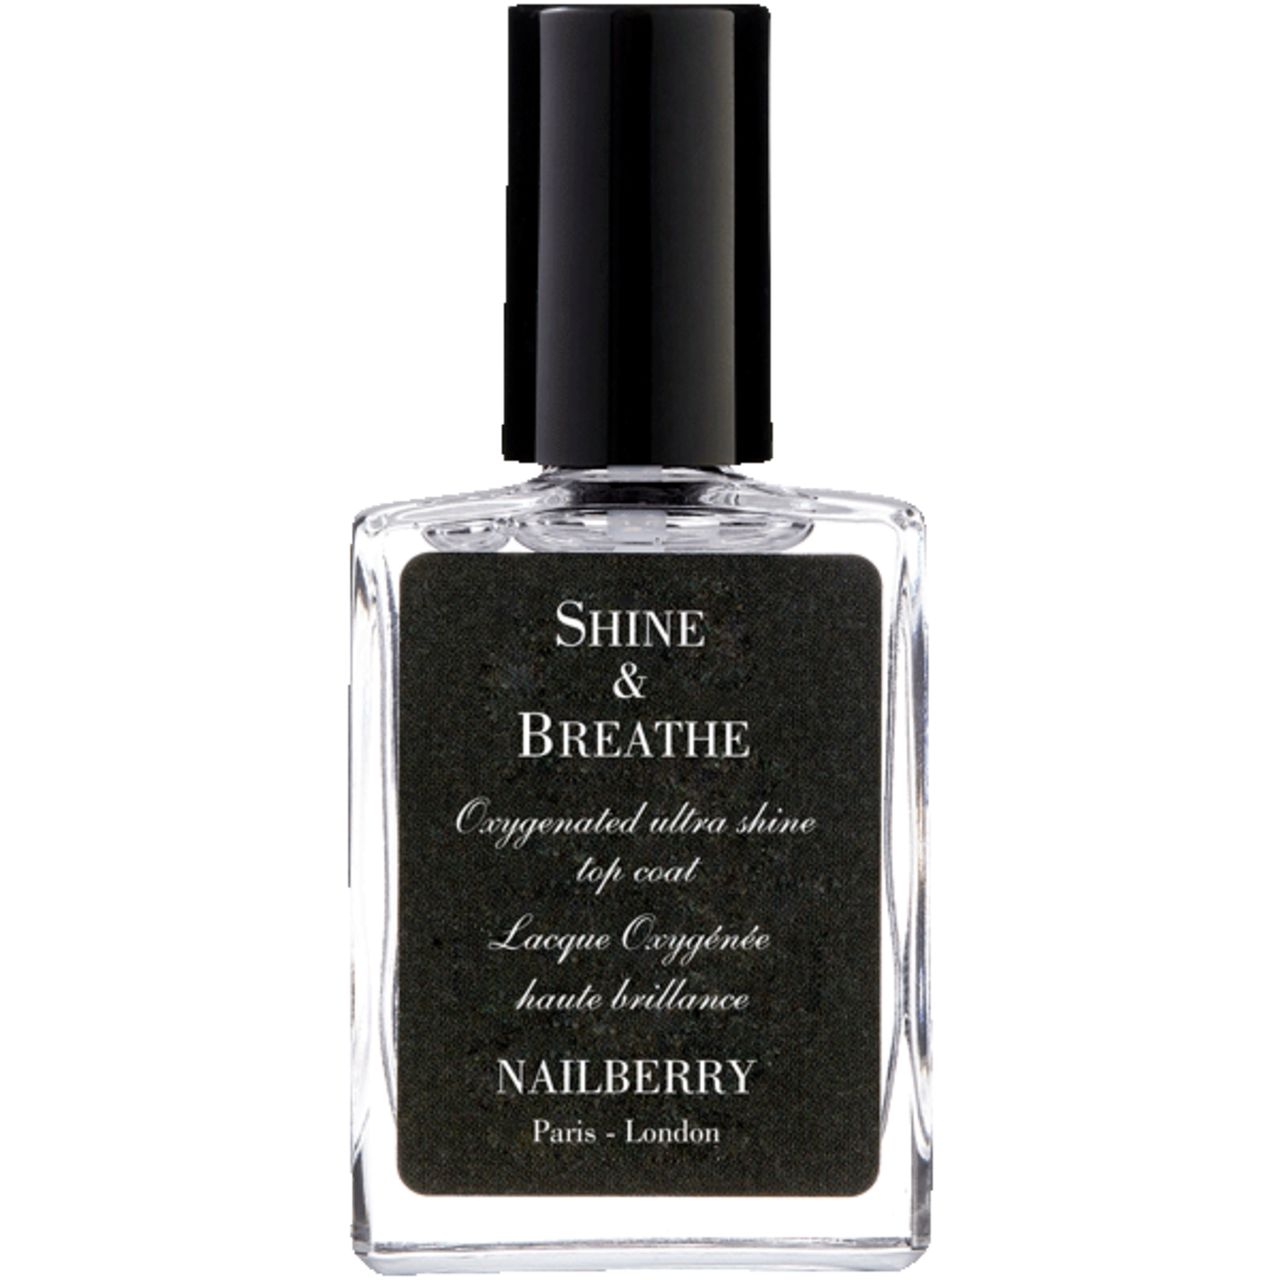 Nailberry, Shine & Breathe Top Coat